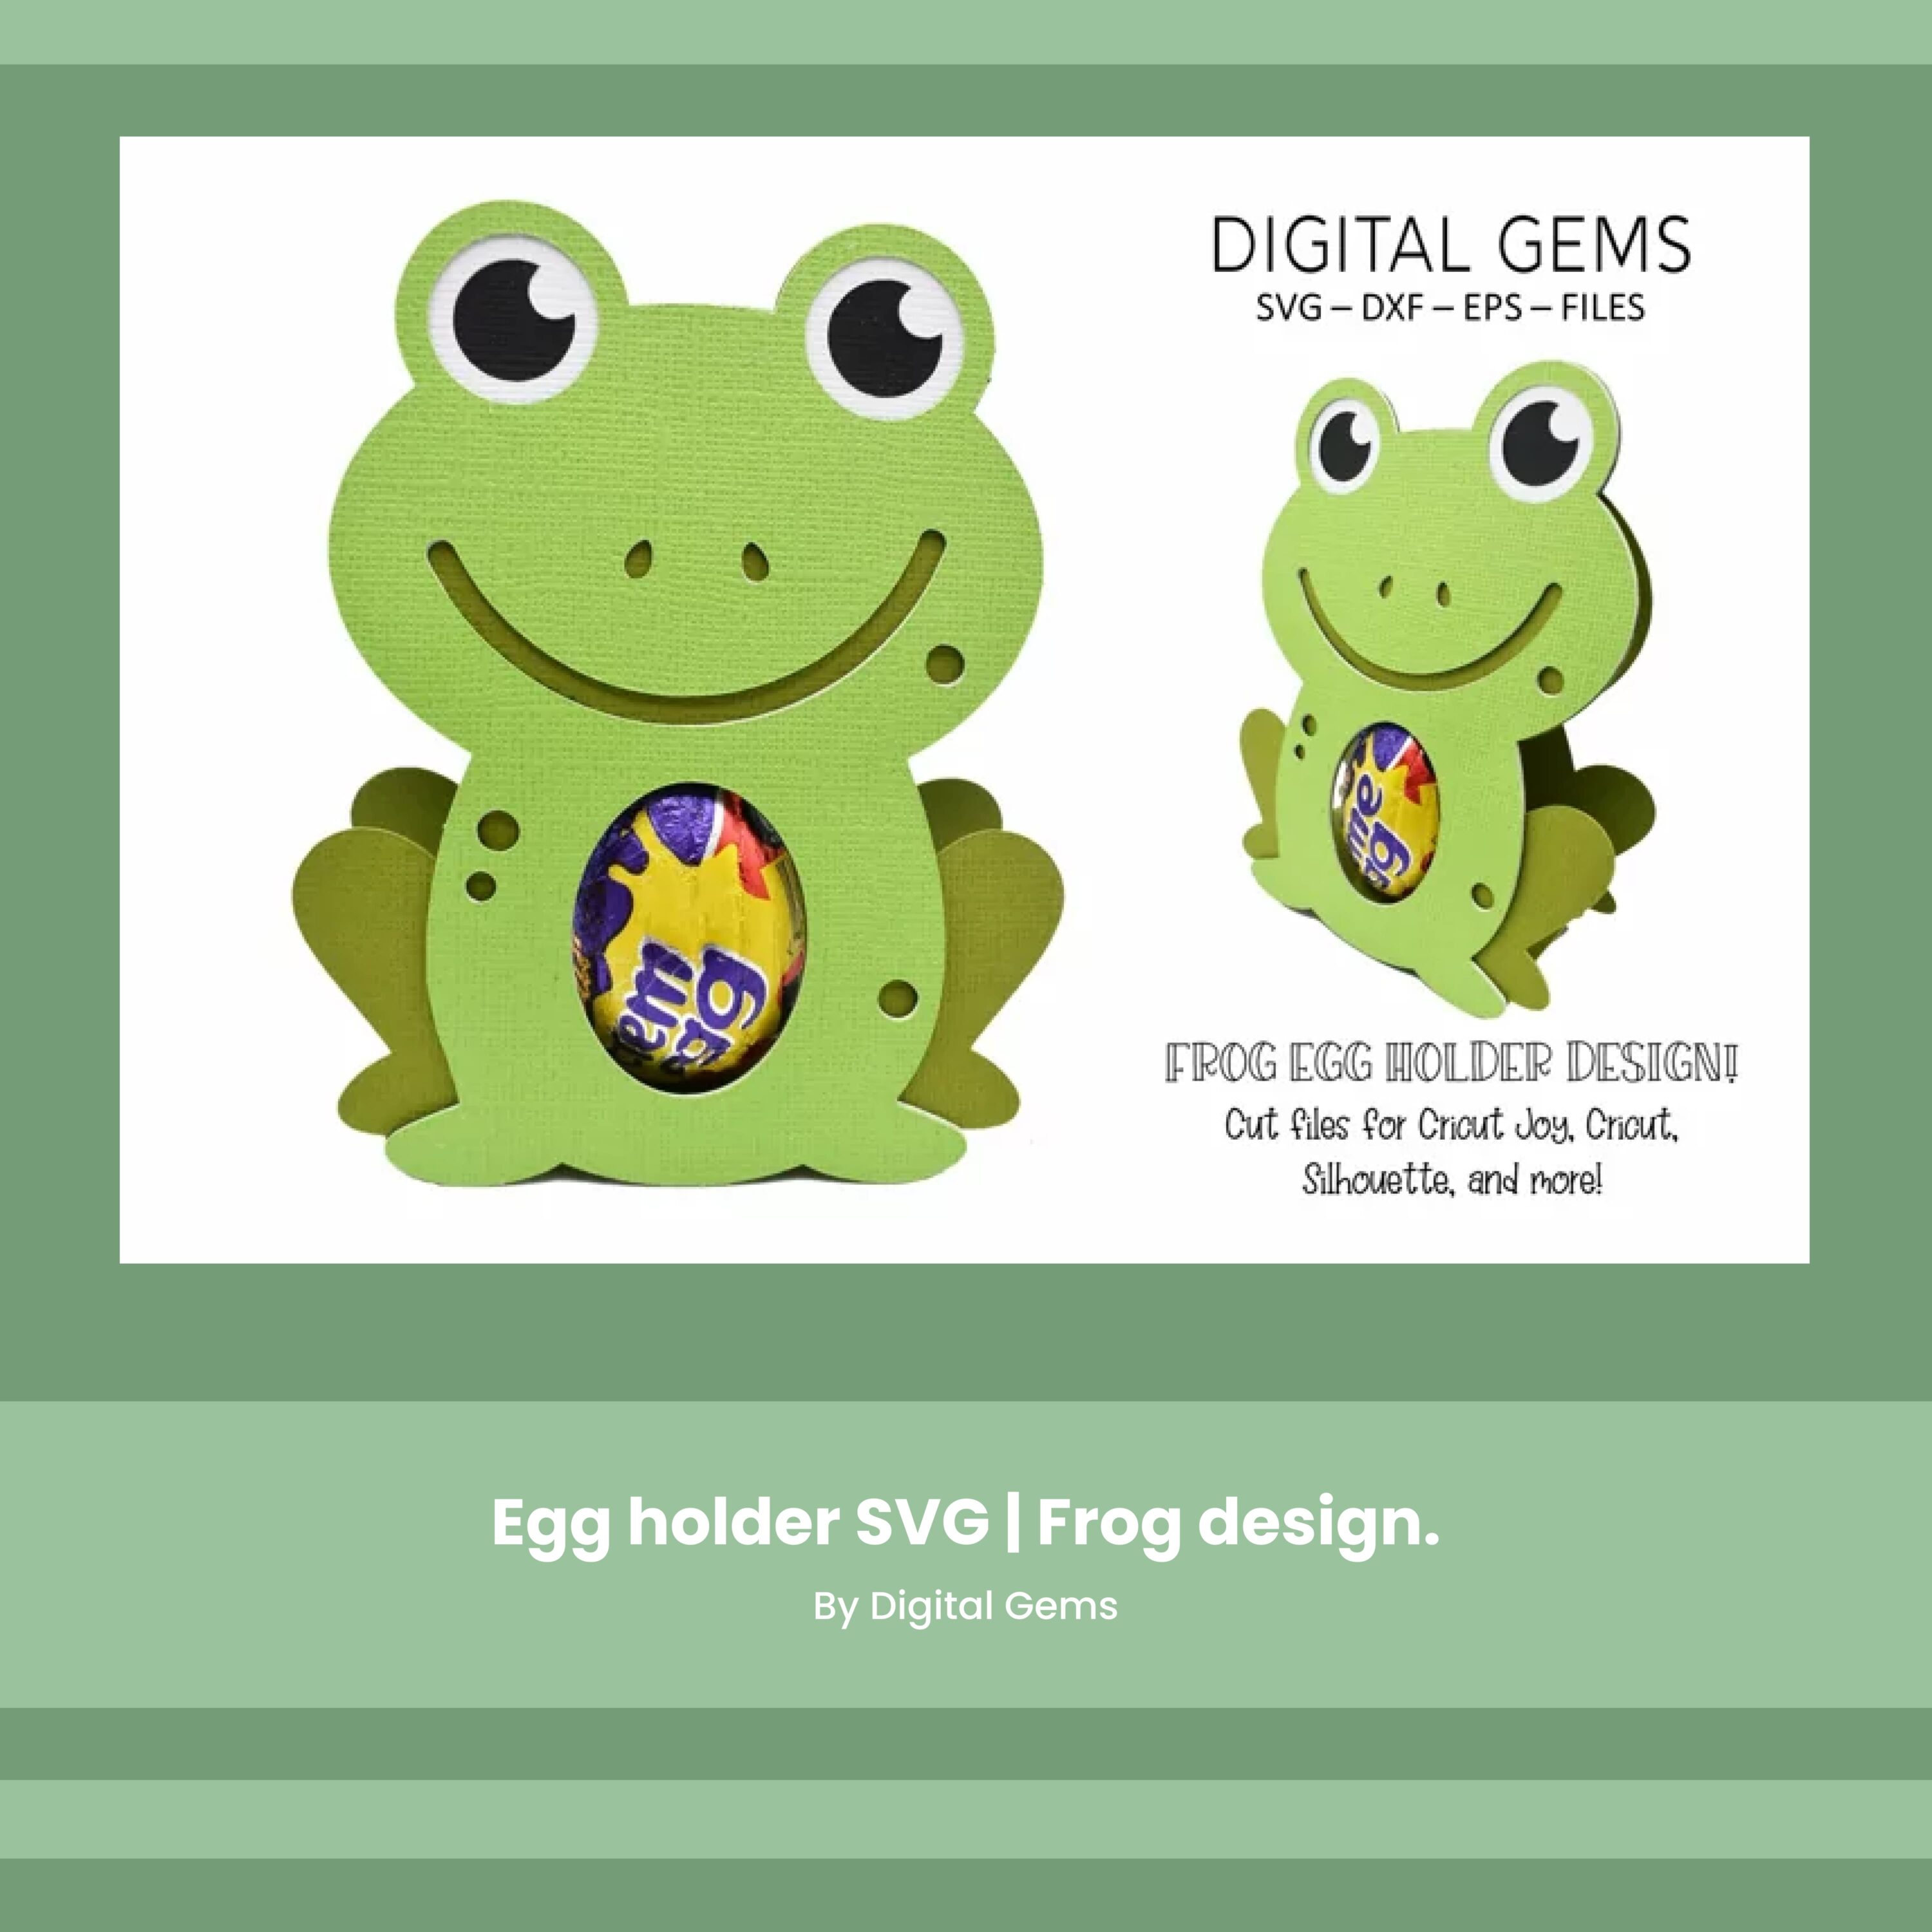 Egg Holder SVG - main image preview.